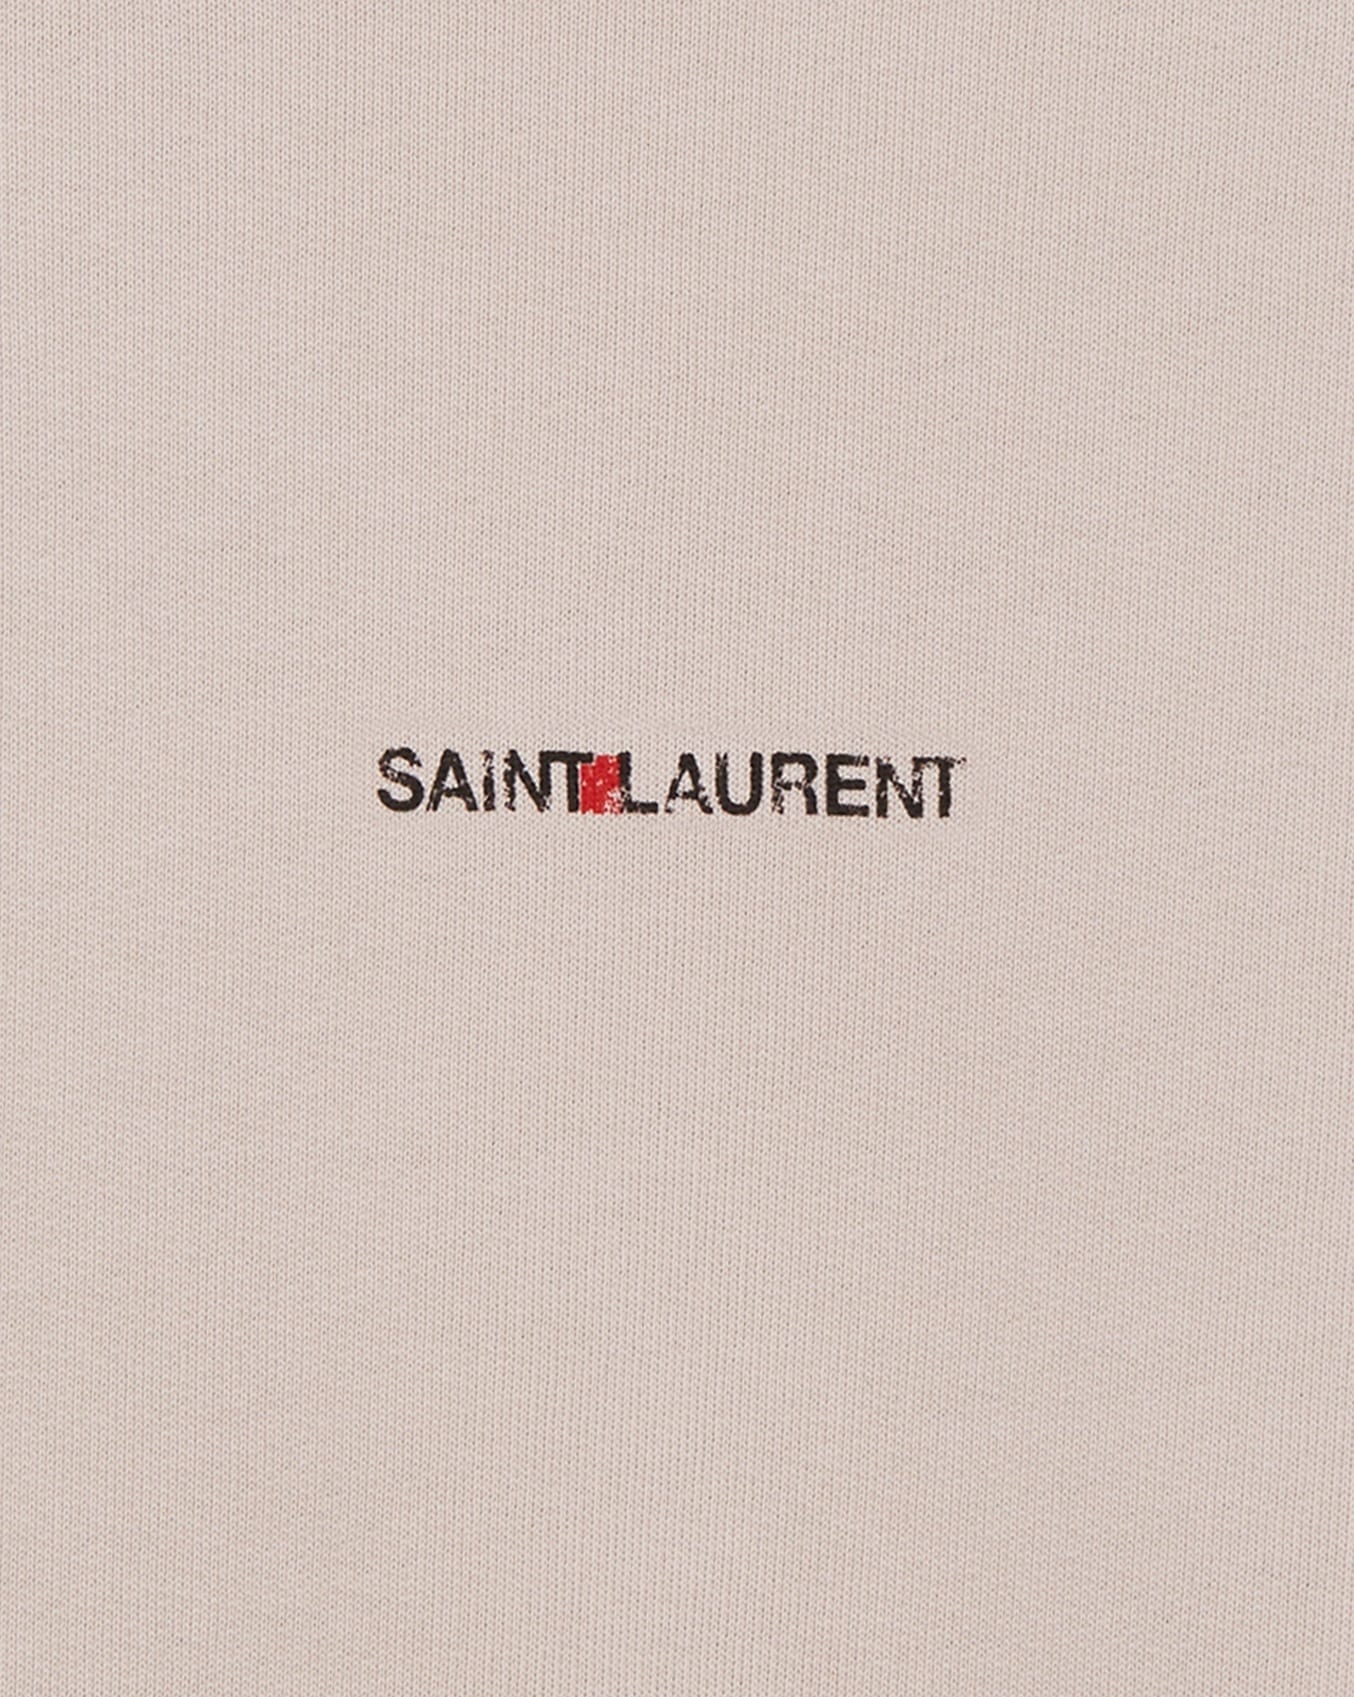 Saint Laurent Logo Crewneck Pink